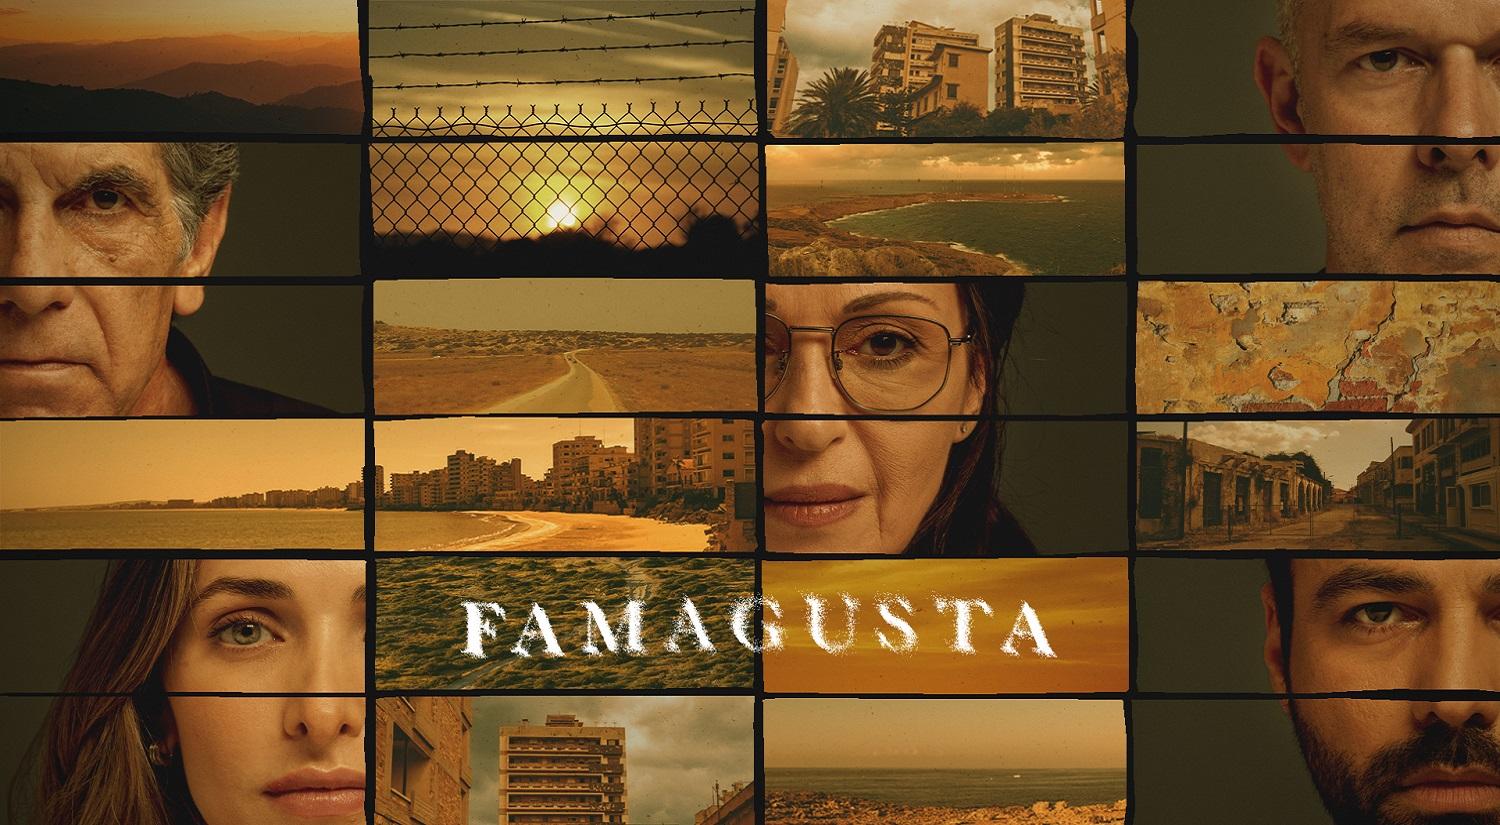 «Famagusta»: Νέο τραγούδι με την υπέροχη φωνή της Γιώτας Νέγκα ανοίγει την αυλαία του β’ κύκλου